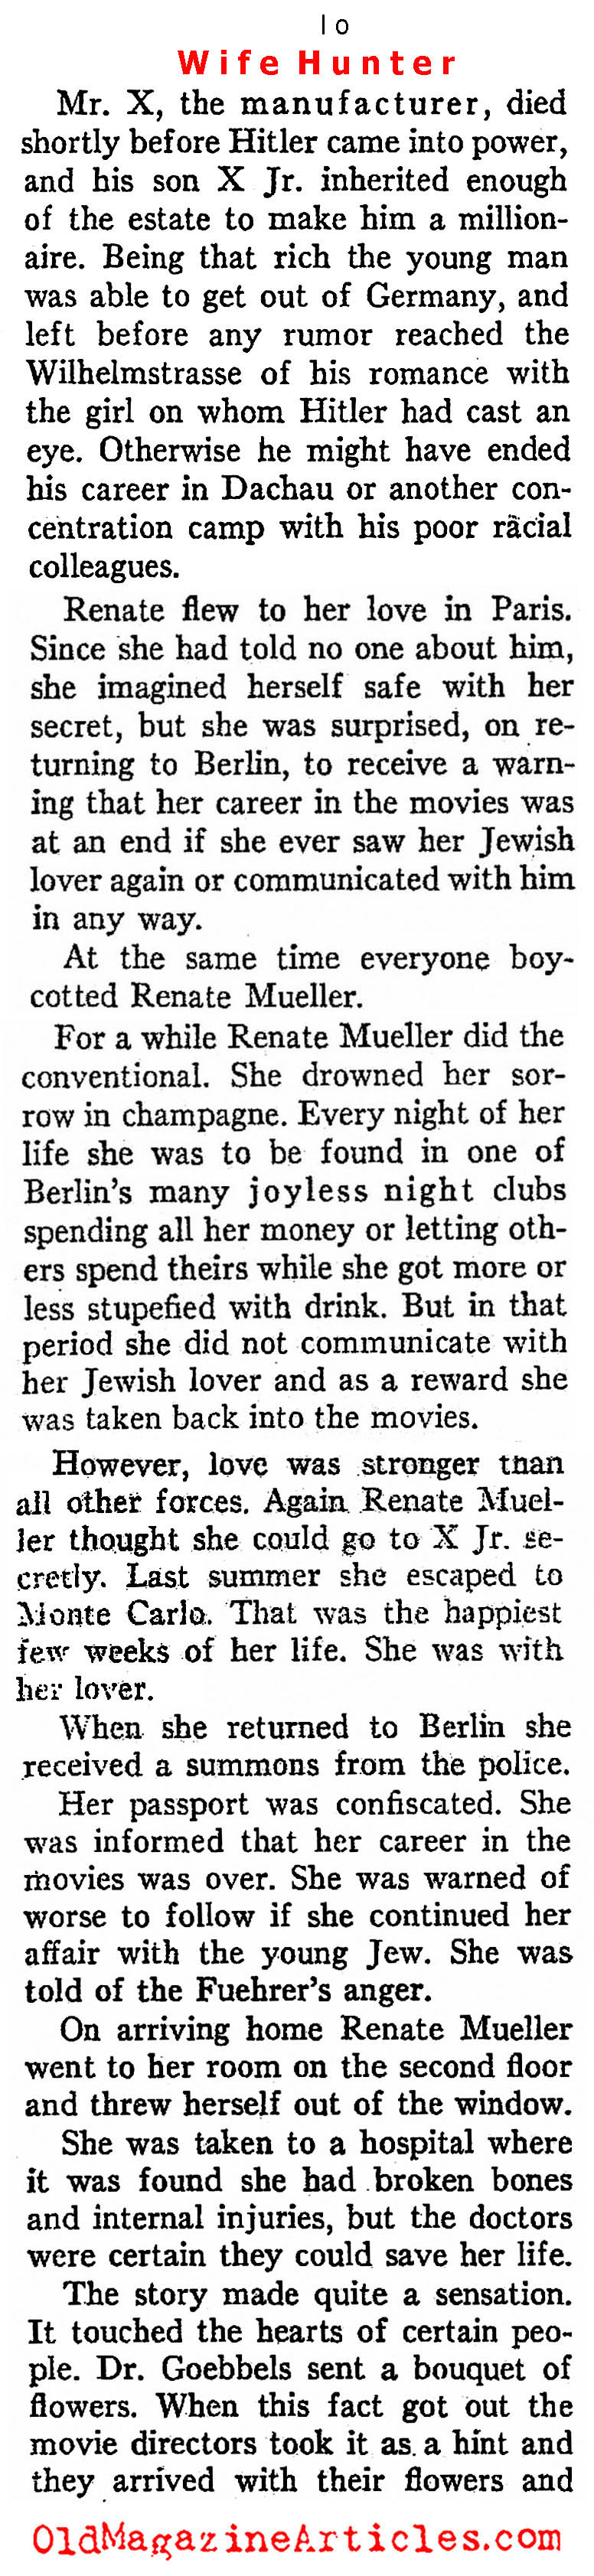 Hitler Goes Wife Shopping (Ken Magazine, 1938)